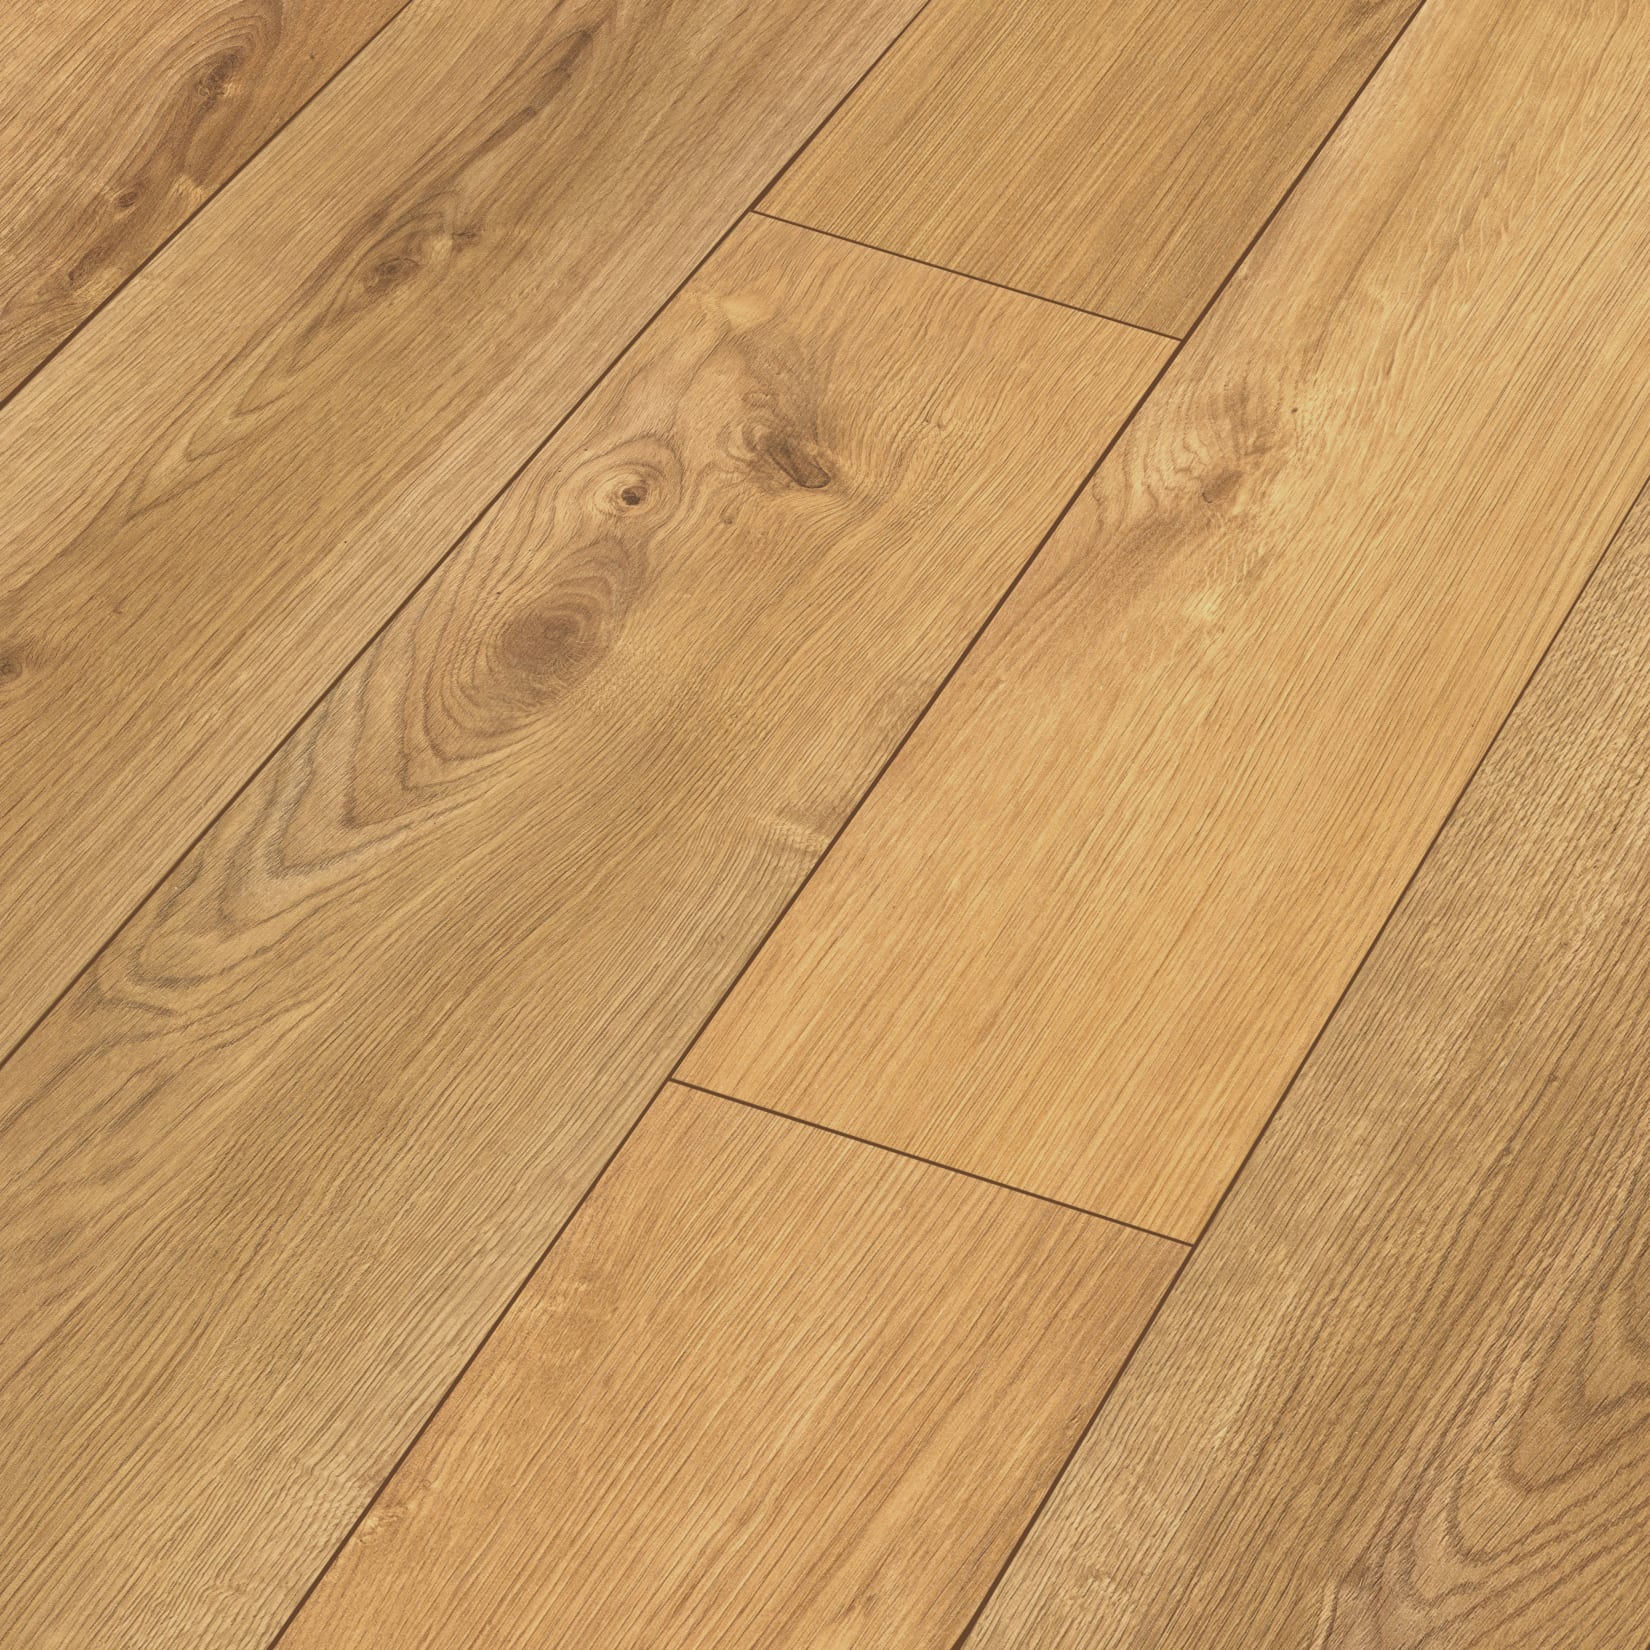 Navelli Light Oak Laminate Flooring - 1.48m2 | Wickes.co.uk